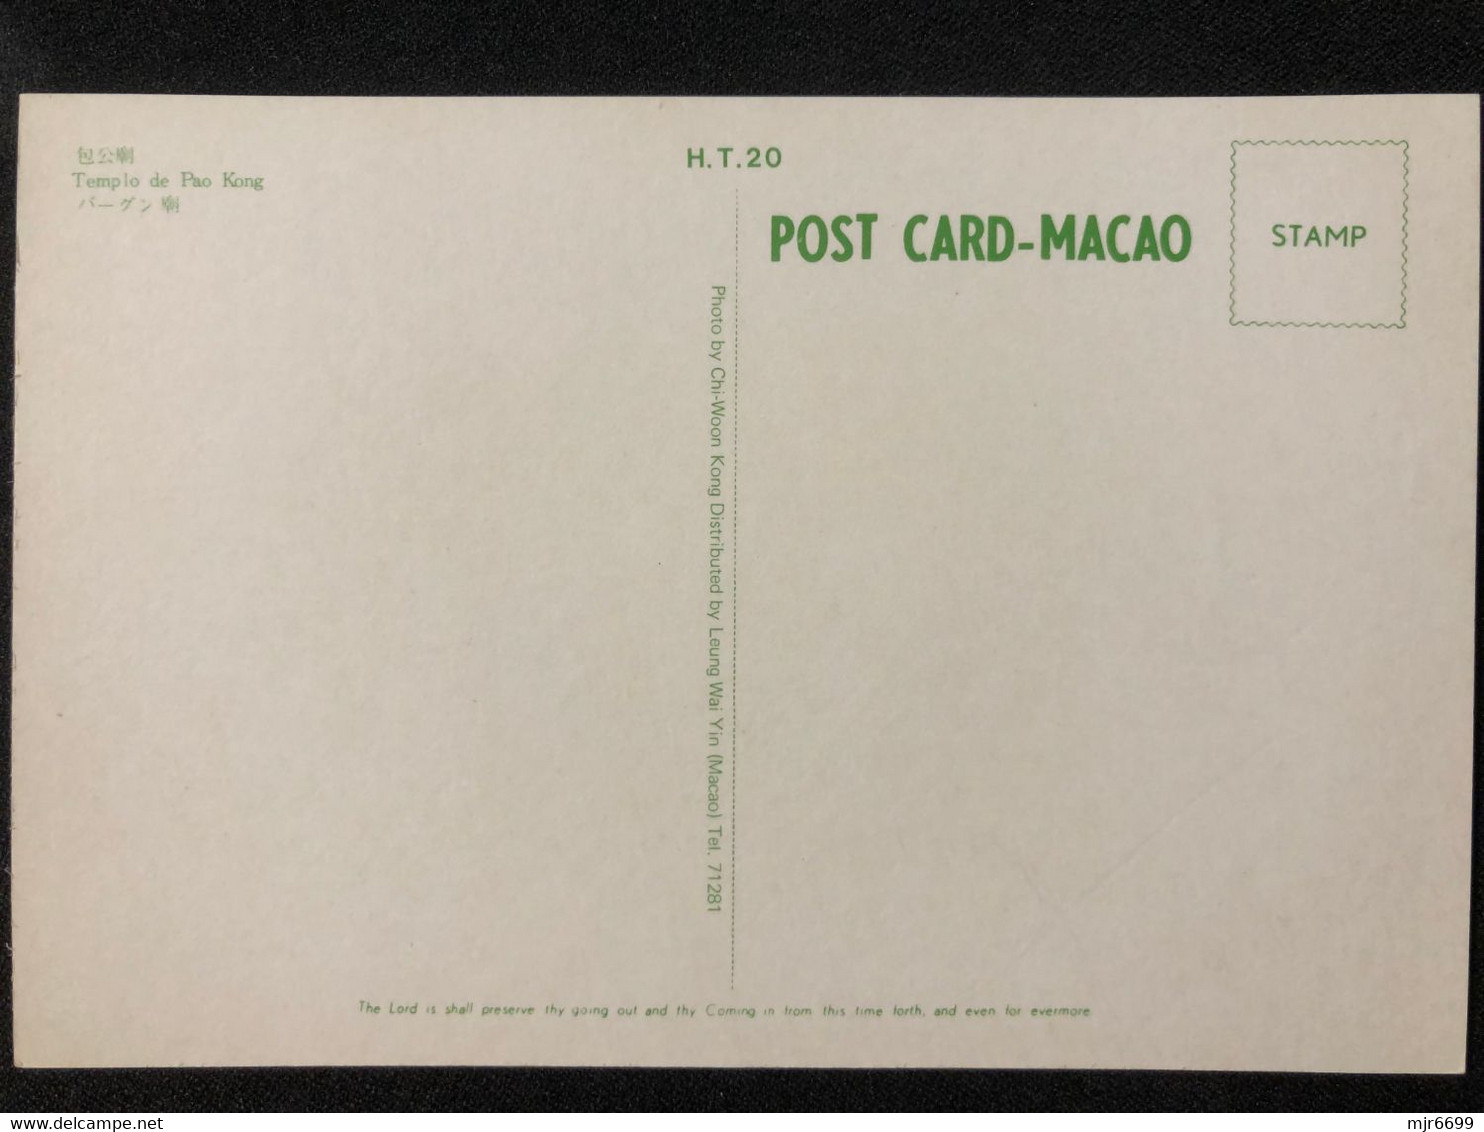 MACAU 1970'S, TEMPLE OF PAO KONG, BOOK STORE PRINTING, SIZE 14,8 X 10CM, #H.T.- 20 - Macau